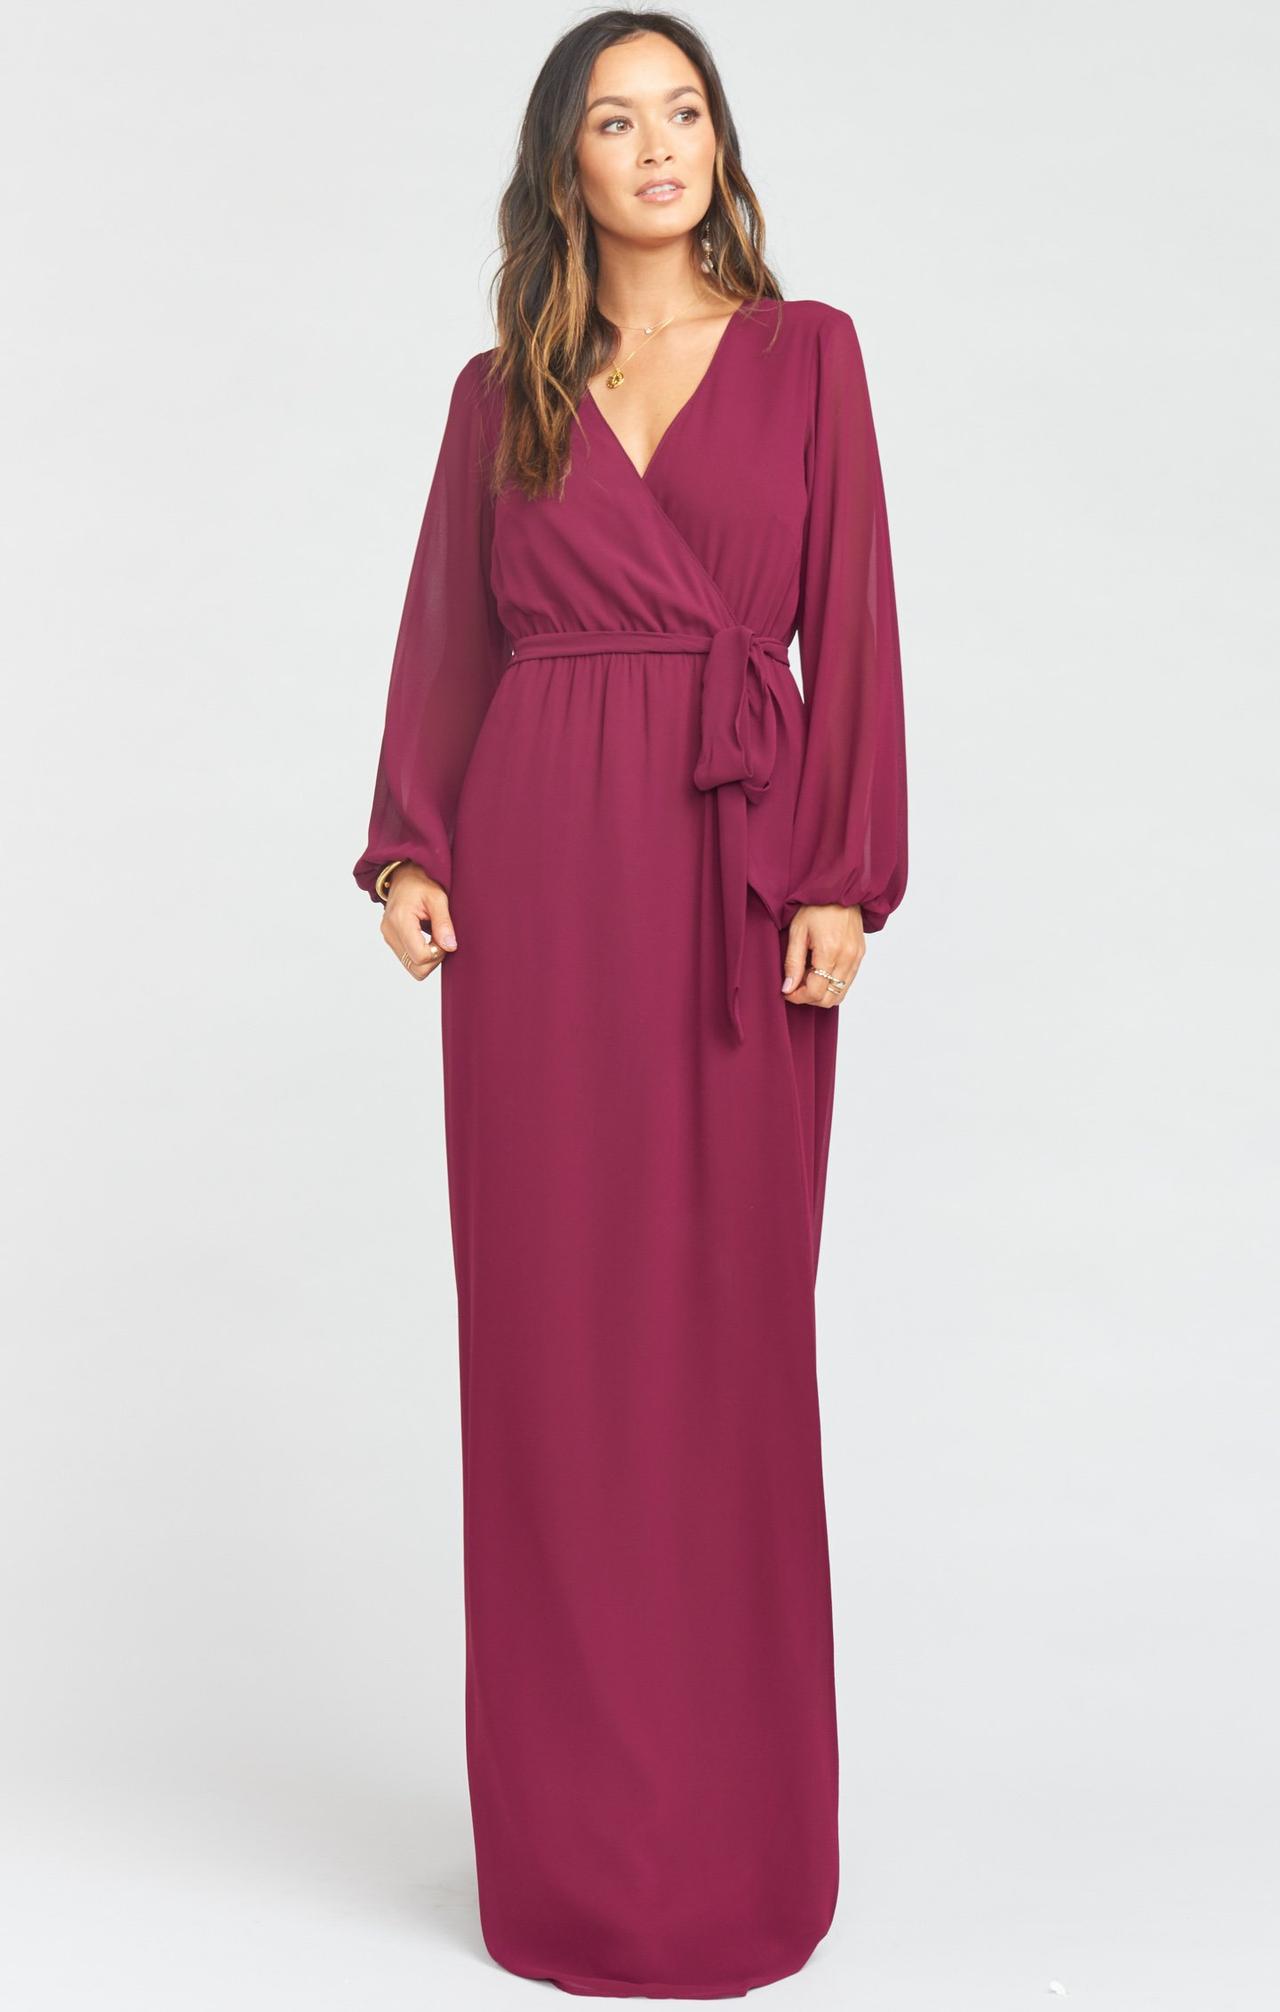 Long-sleeve burgundy bridesmaid dress